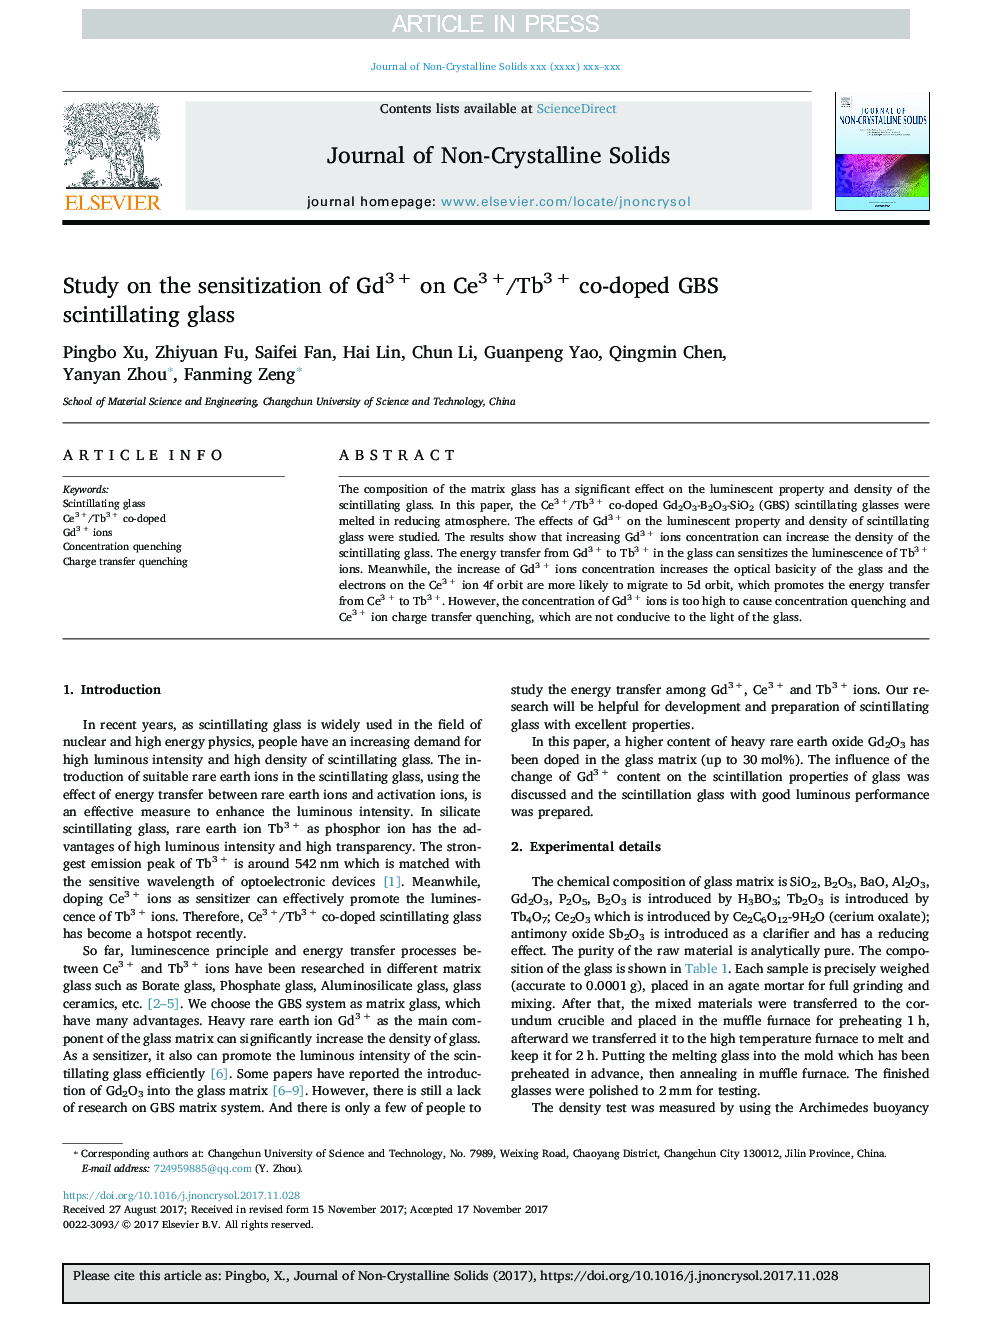 Study on the sensitization of Gd3Â + on Ce3Â +/Tb3Â + co-doped GBS scintillating glass